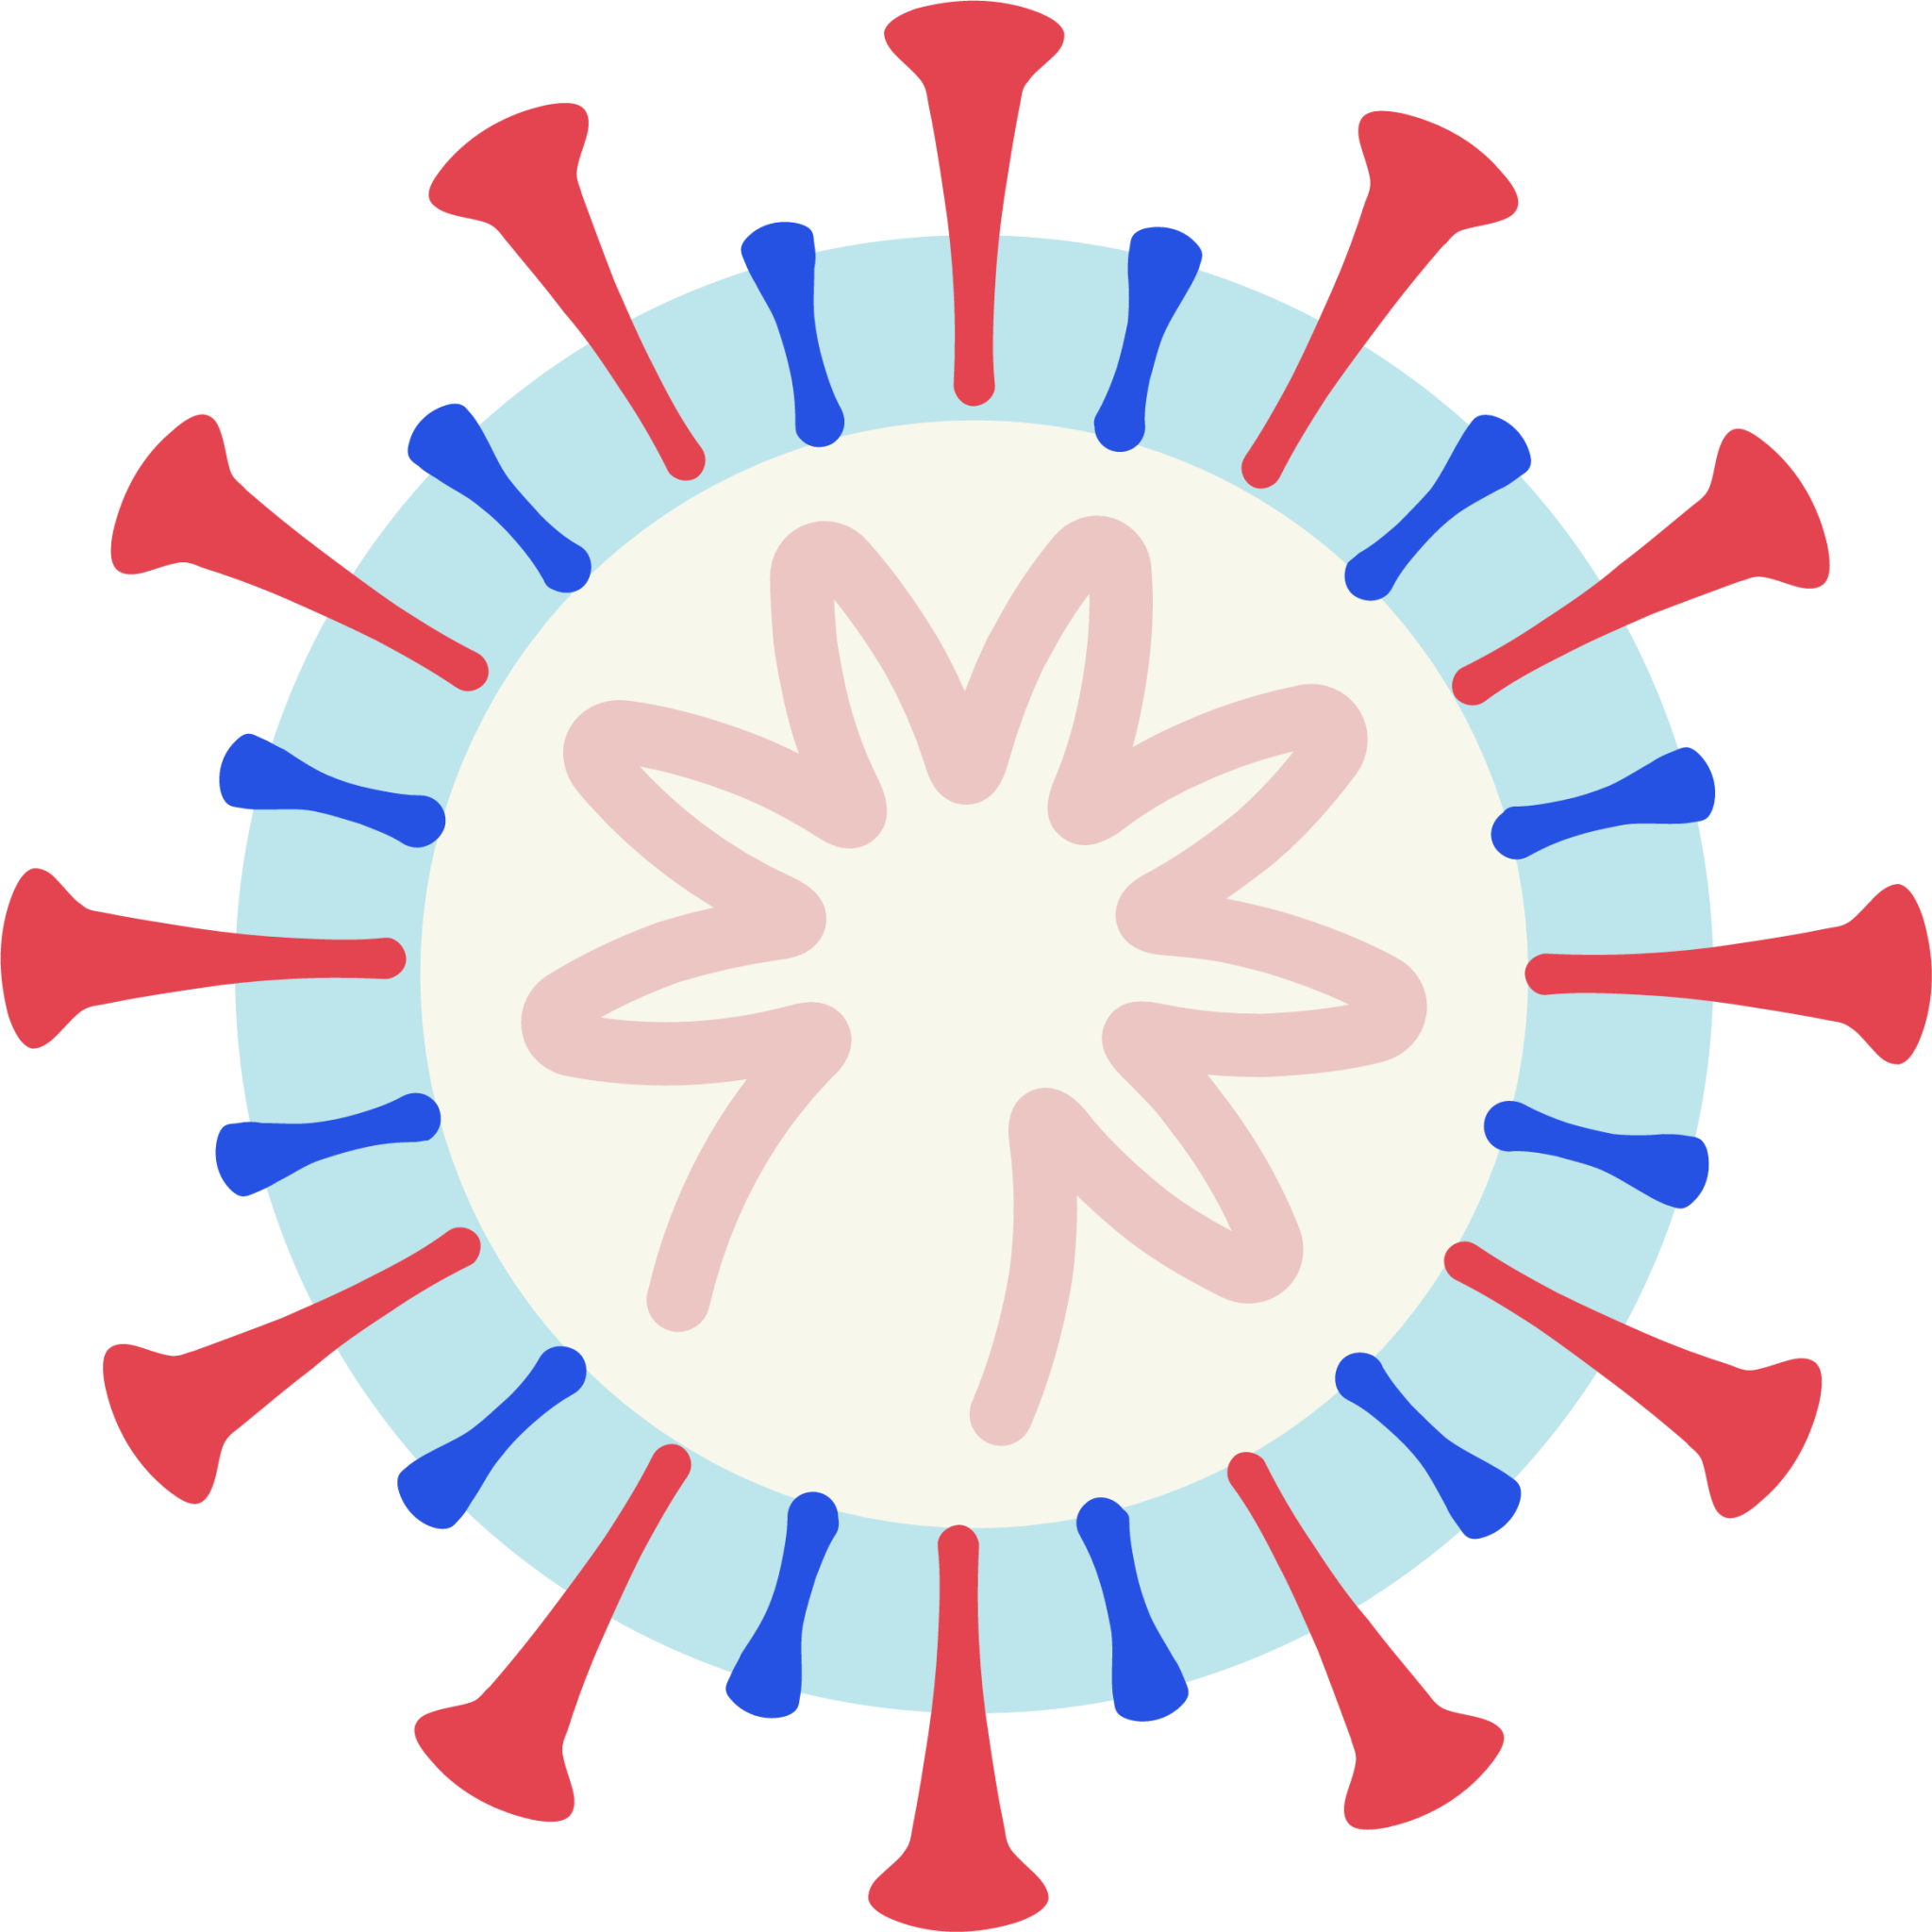 corona corona virus coronavirus covid19 genome virus illustration